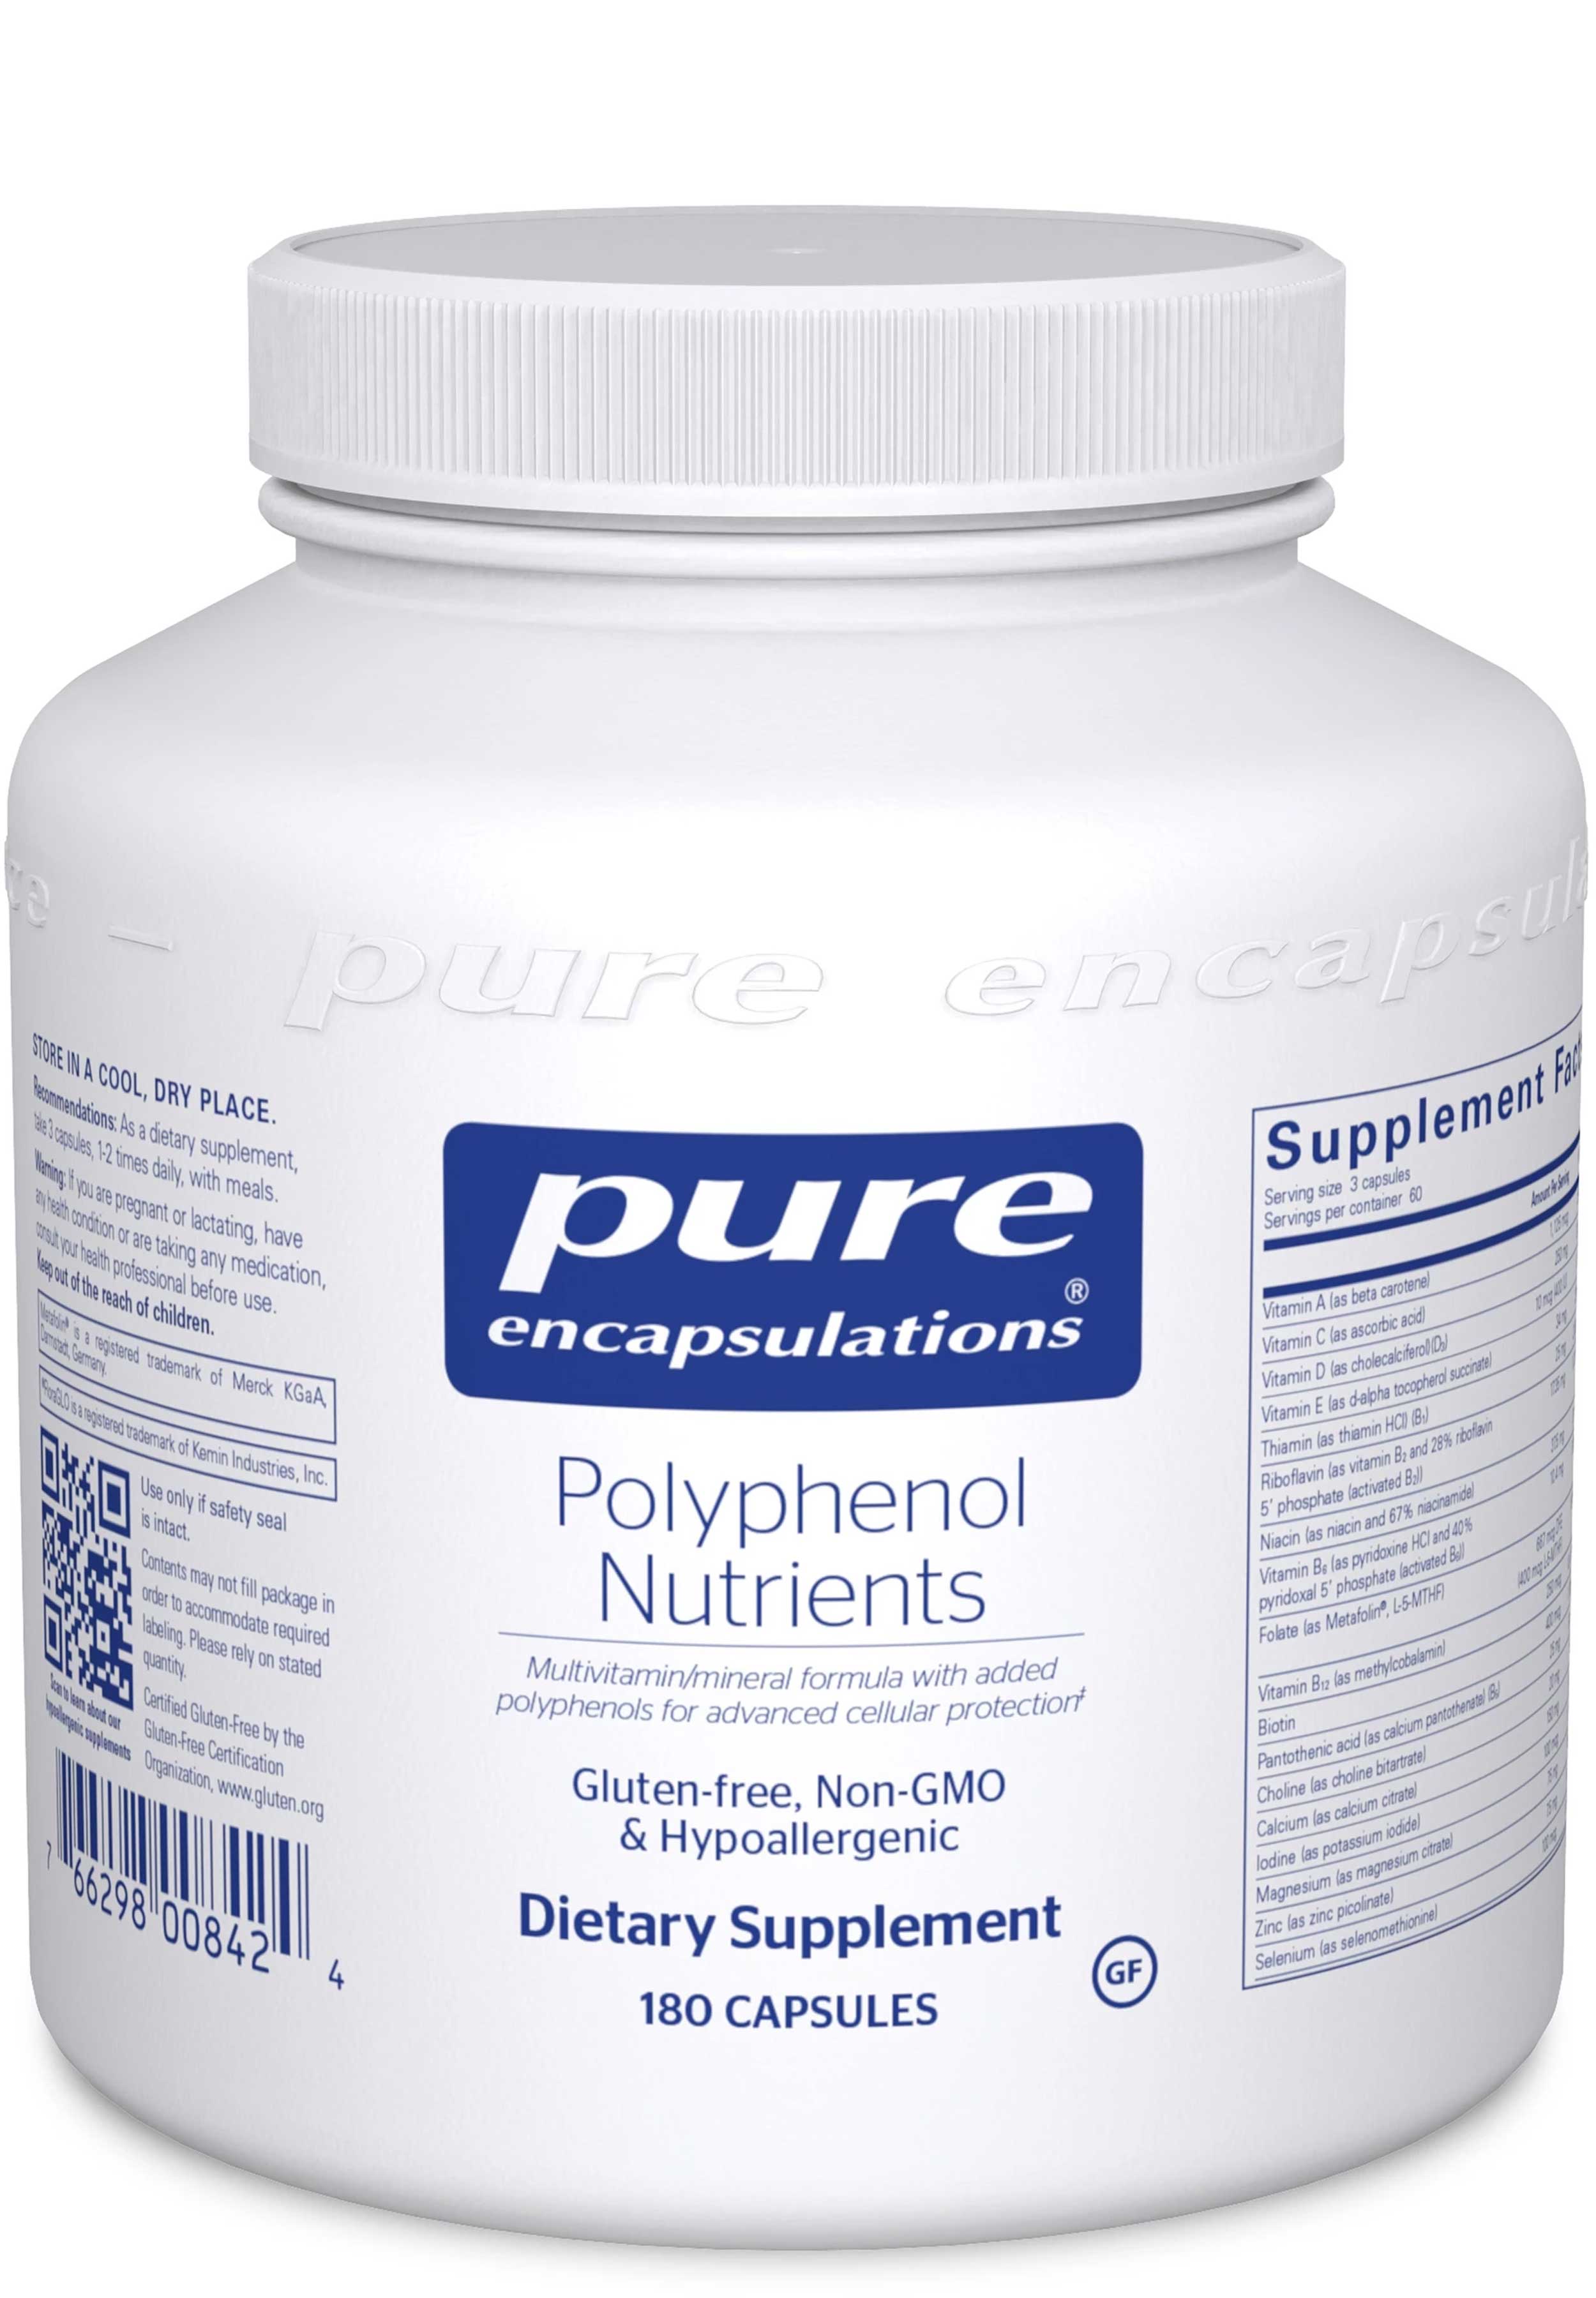 Pure Encapsulations Polyphenol Nutrients